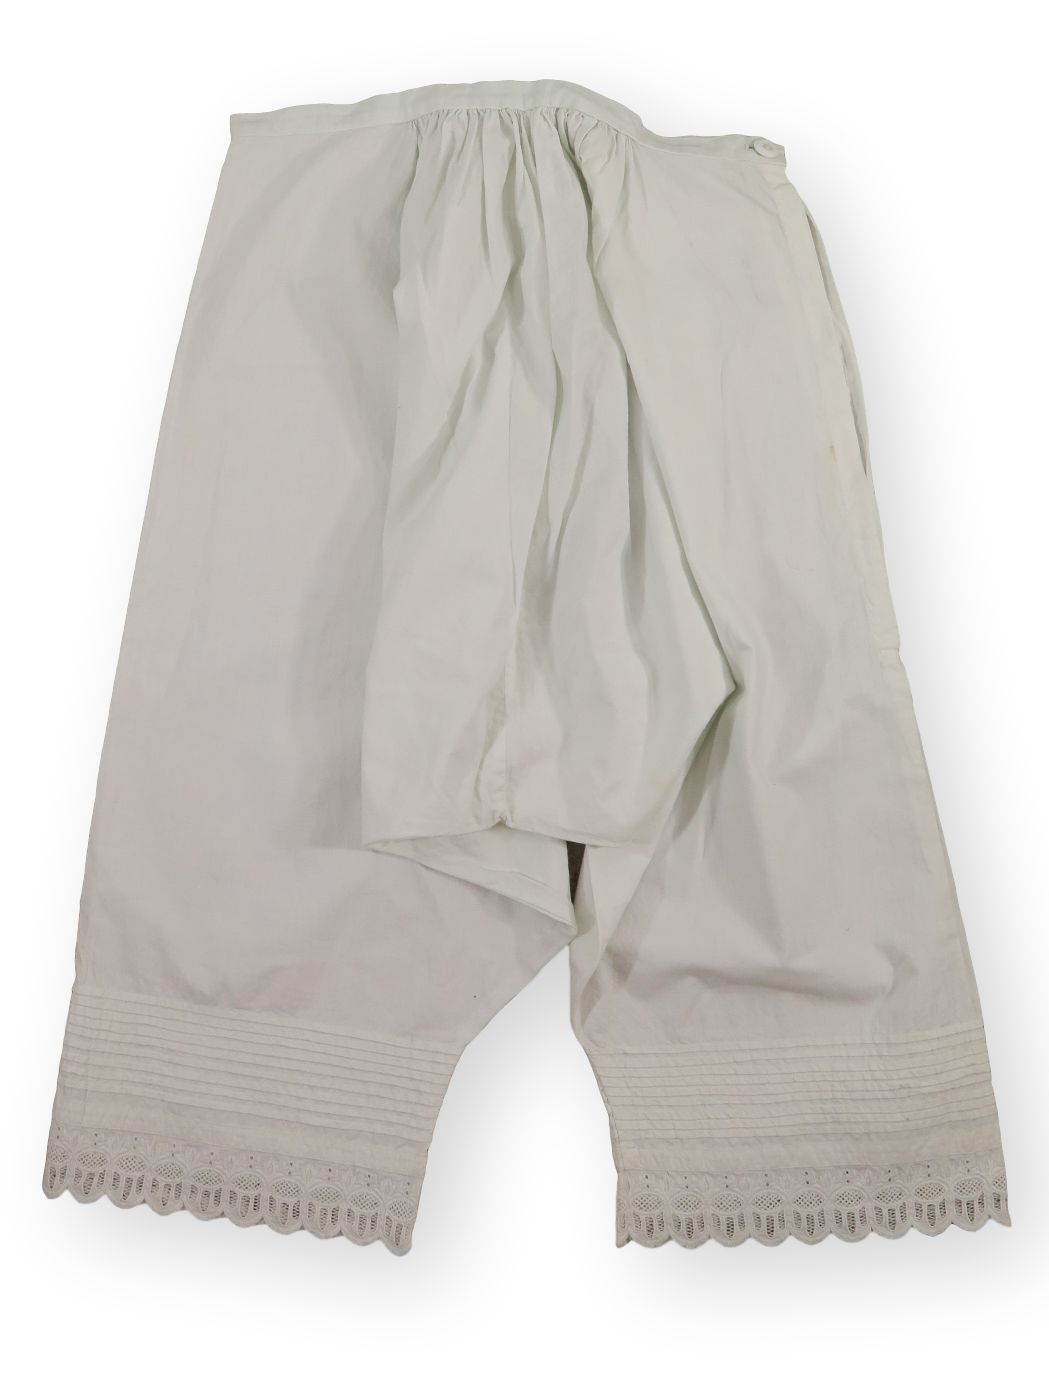 Antique Drawers or Pantaloons Victorian Edwardian Underwear - sm, med –  Better Dresses Vintage